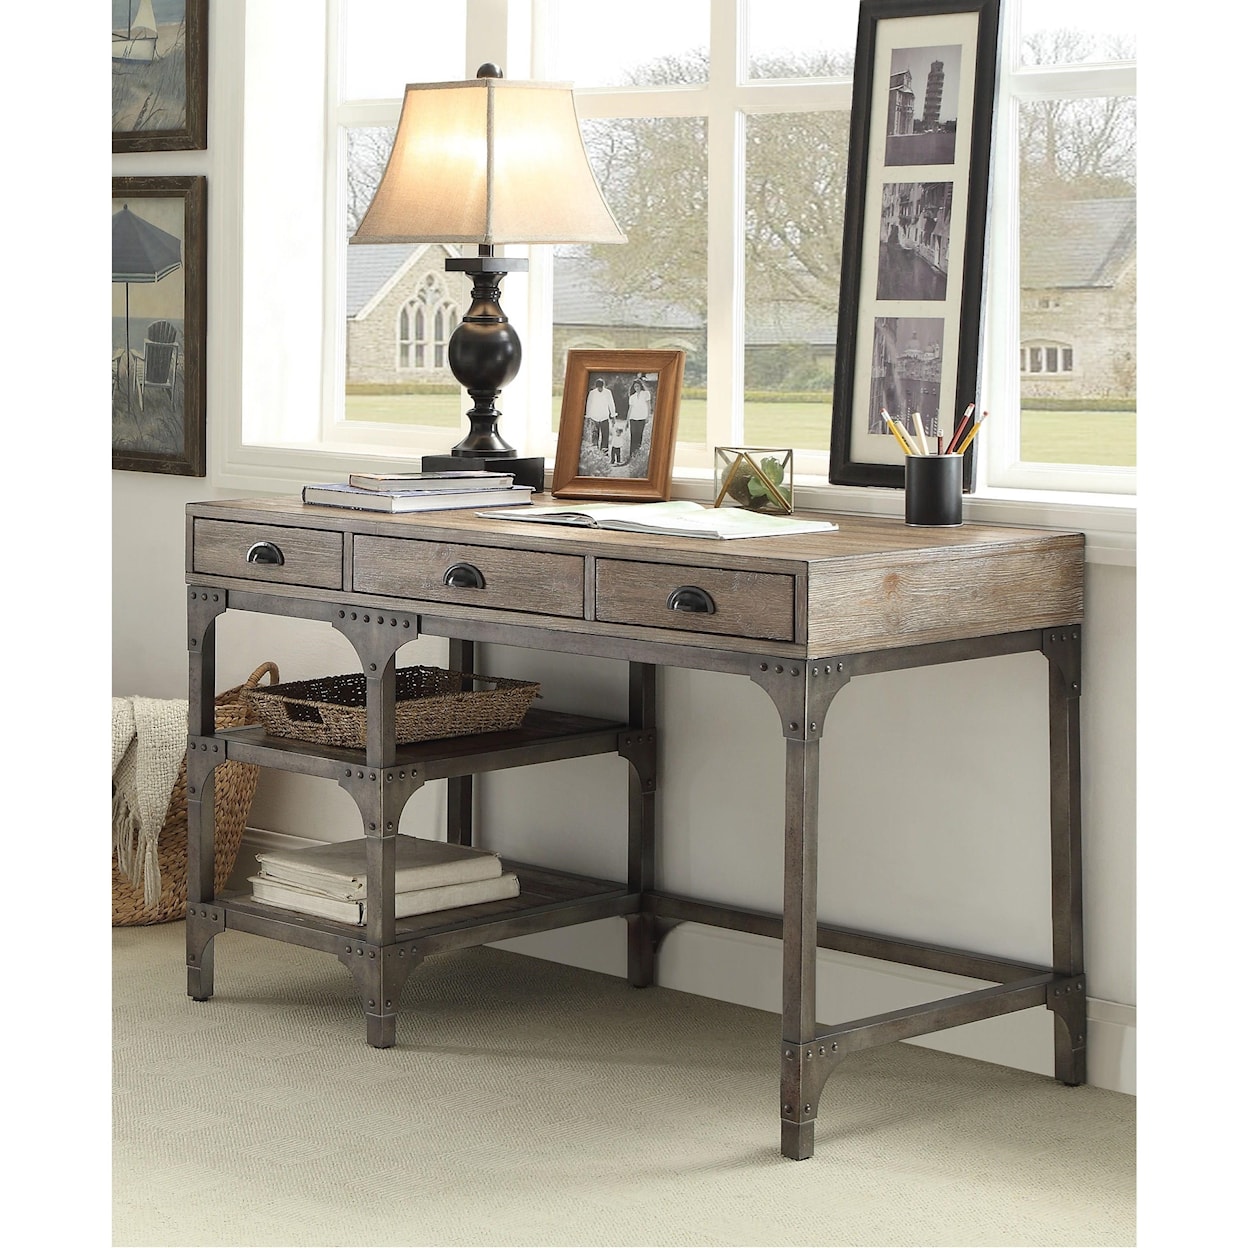 Acme Furniture Gorden Desk